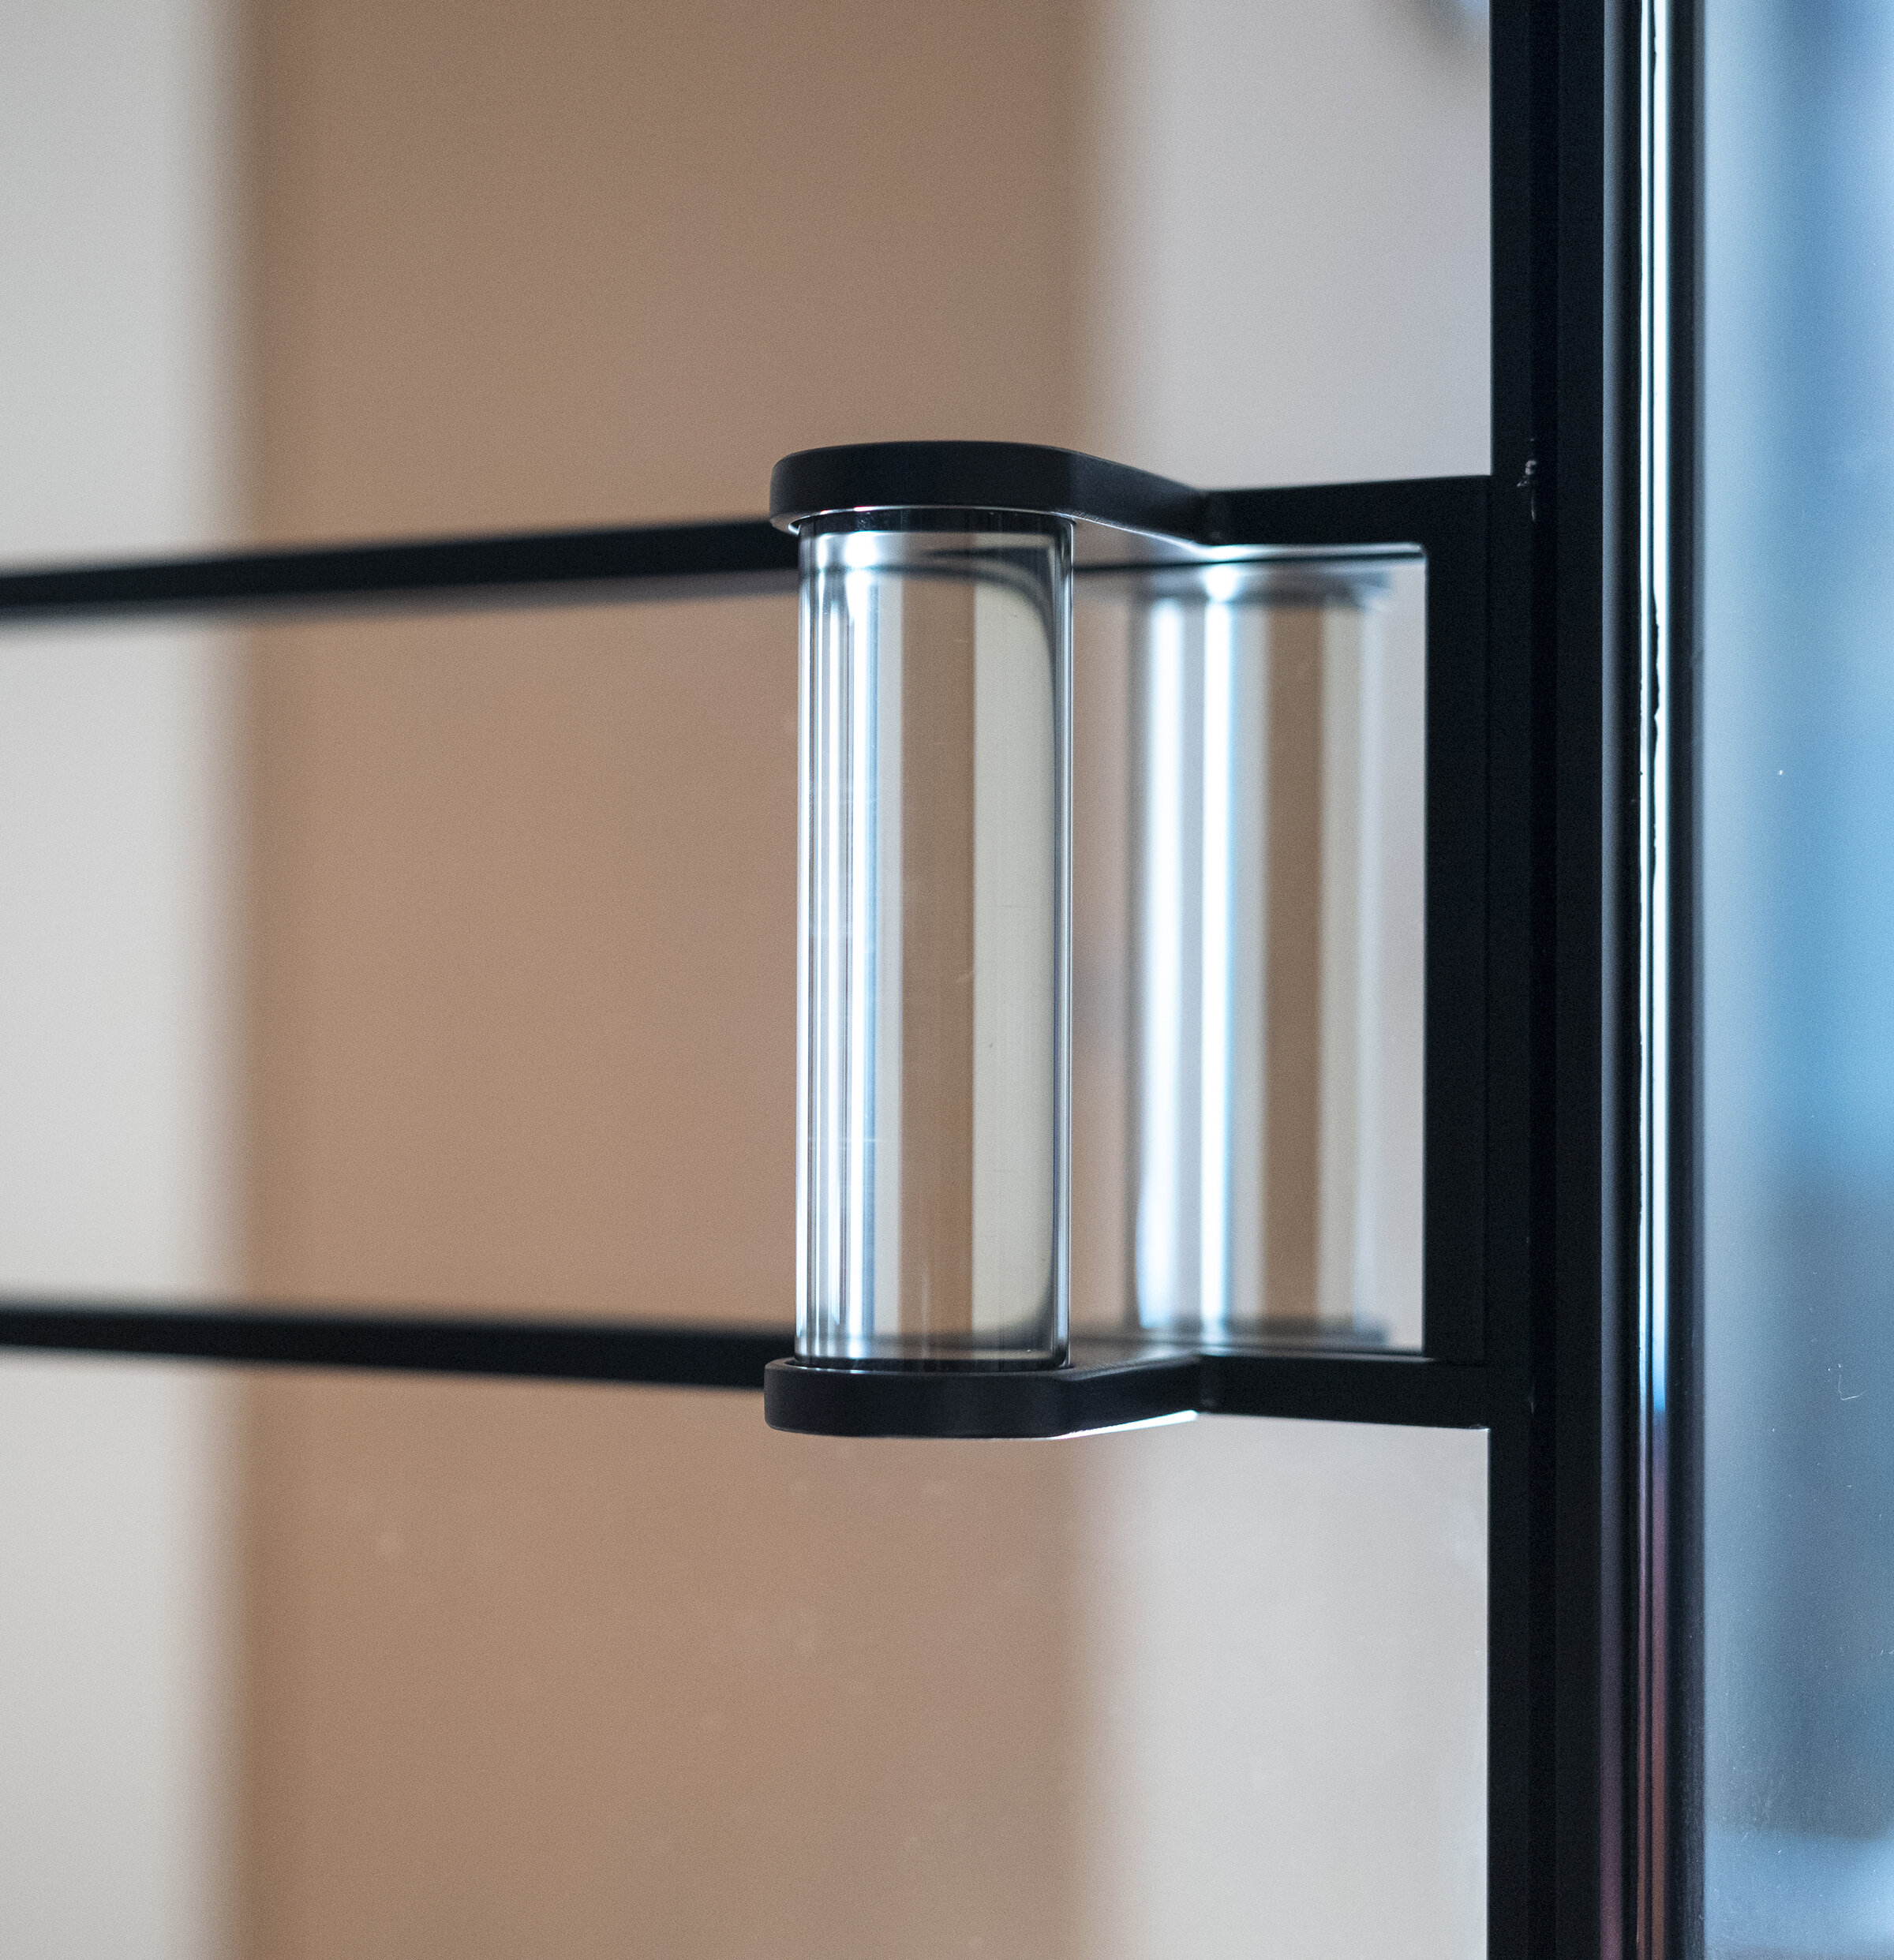 Custom glass doors and handle